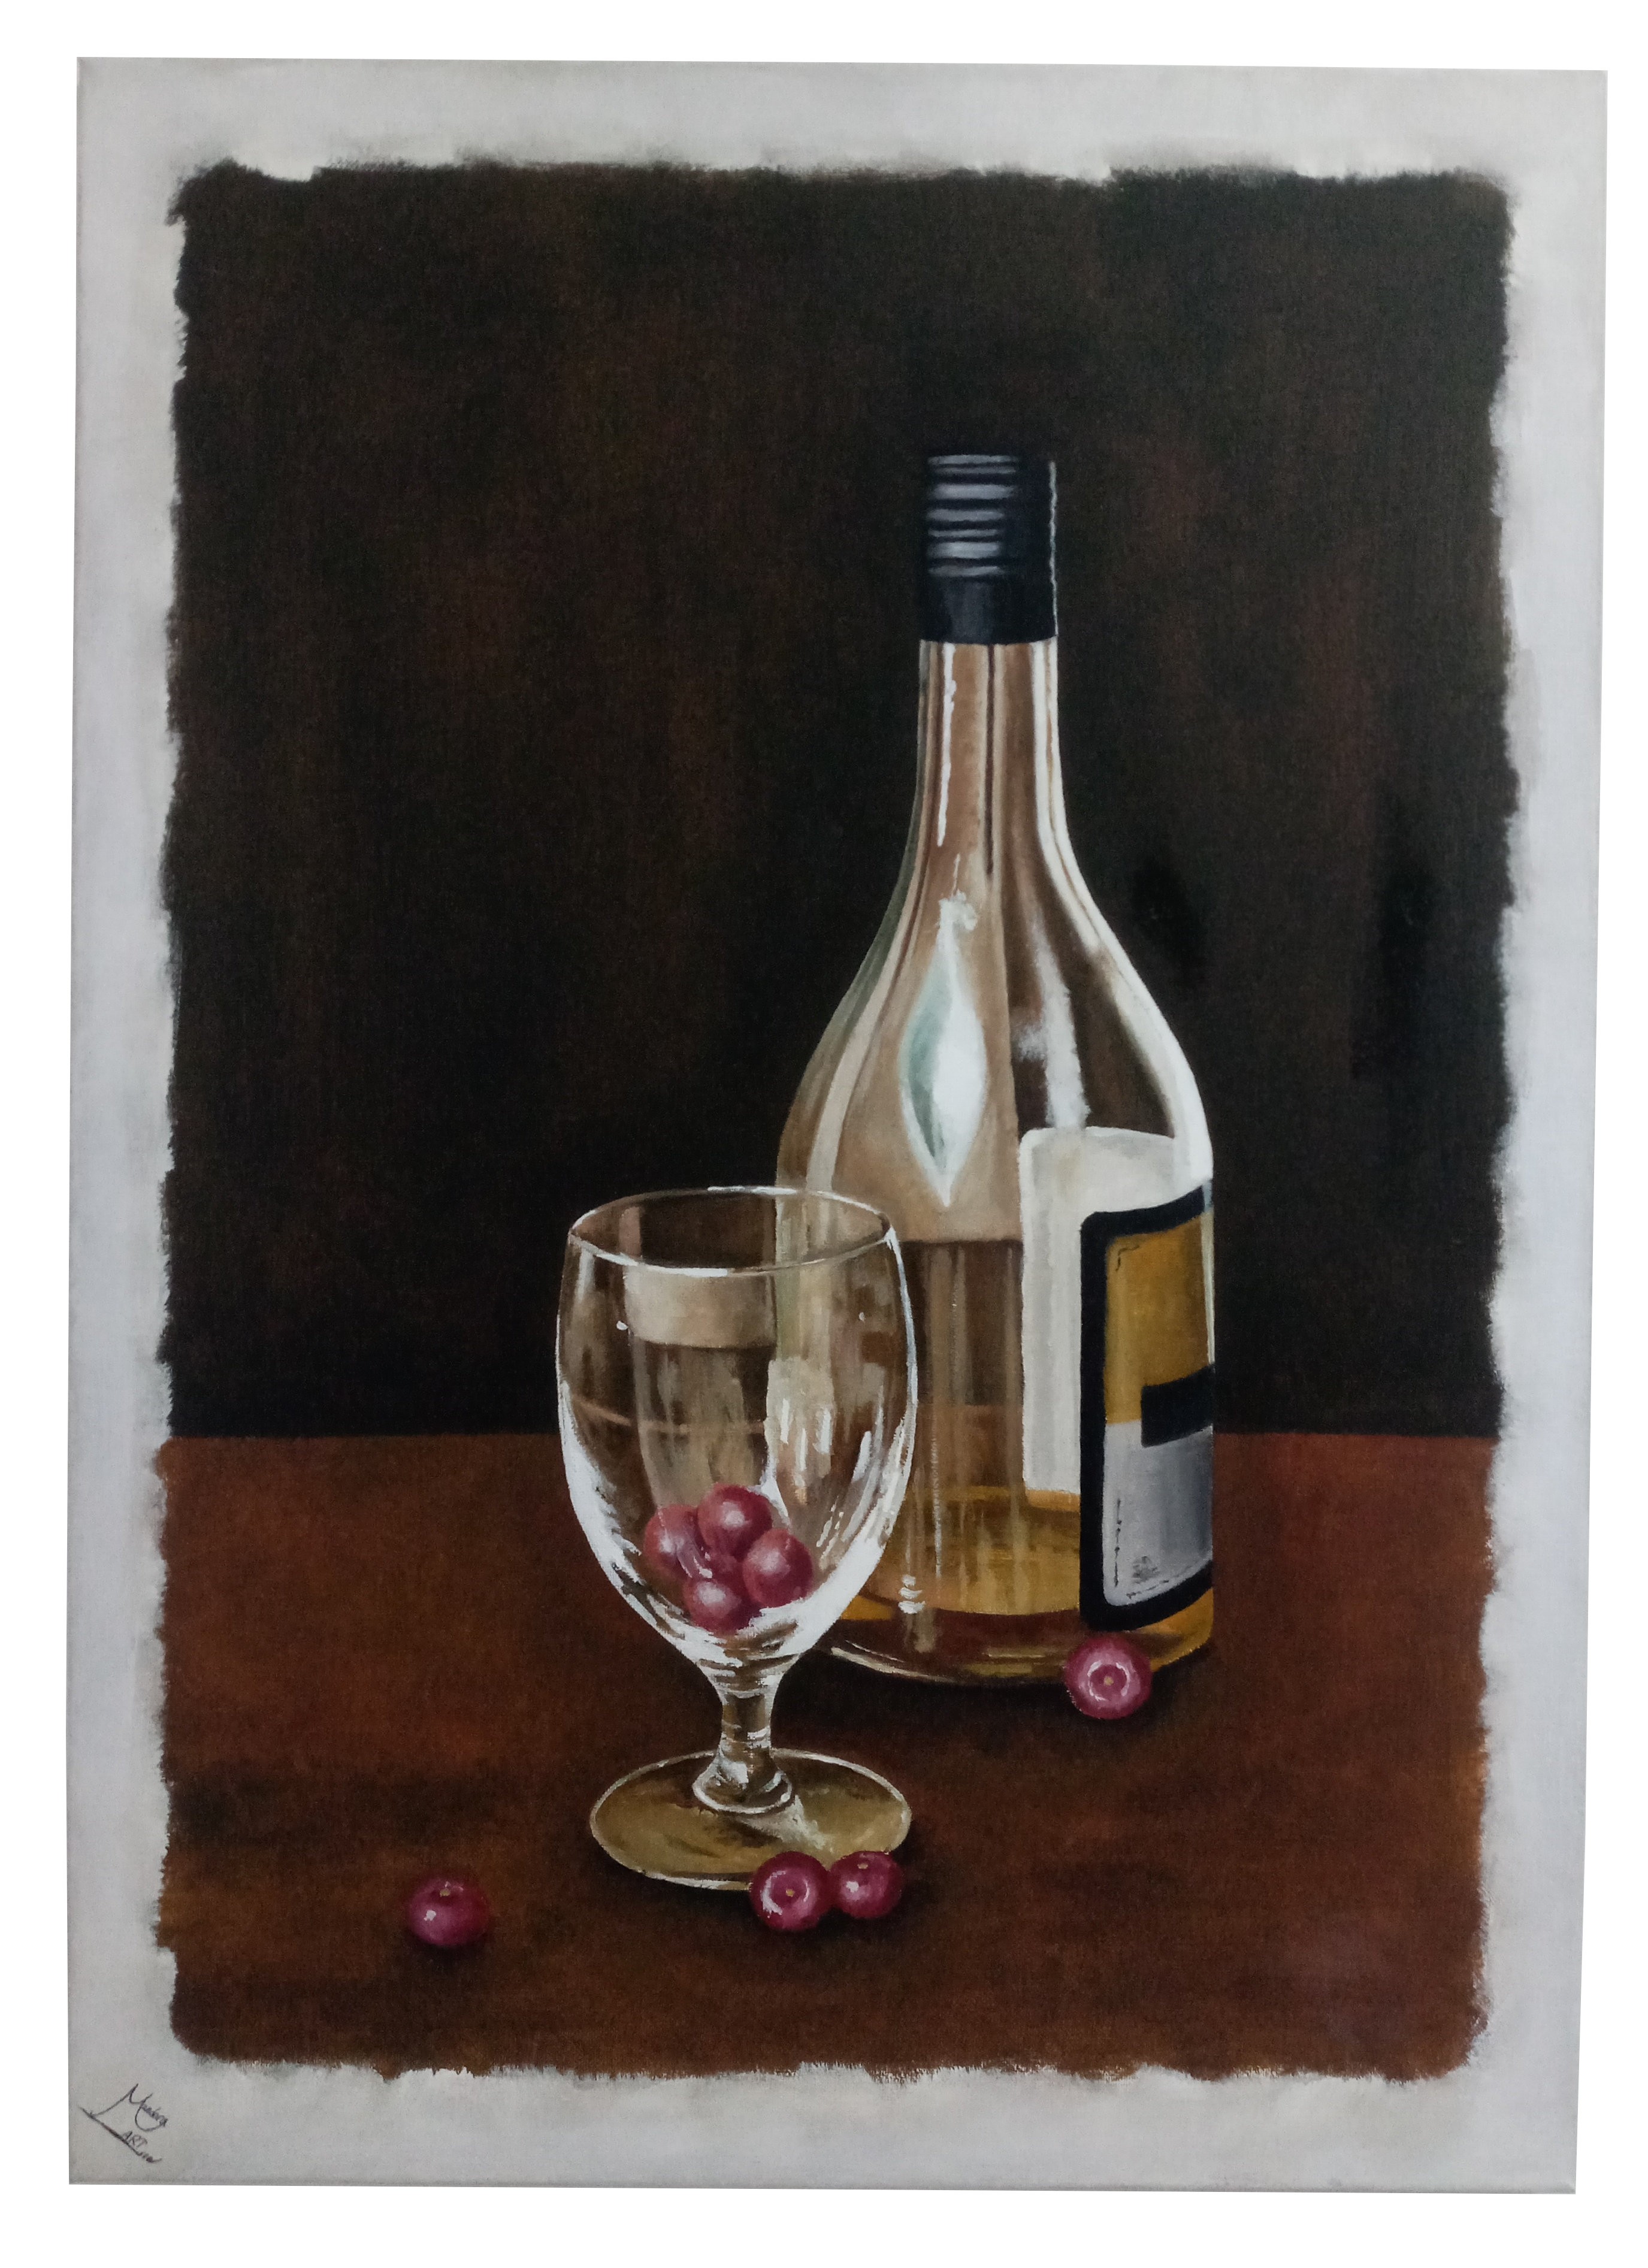 Bottle n' Glass with cherries by Sadeera Mandara